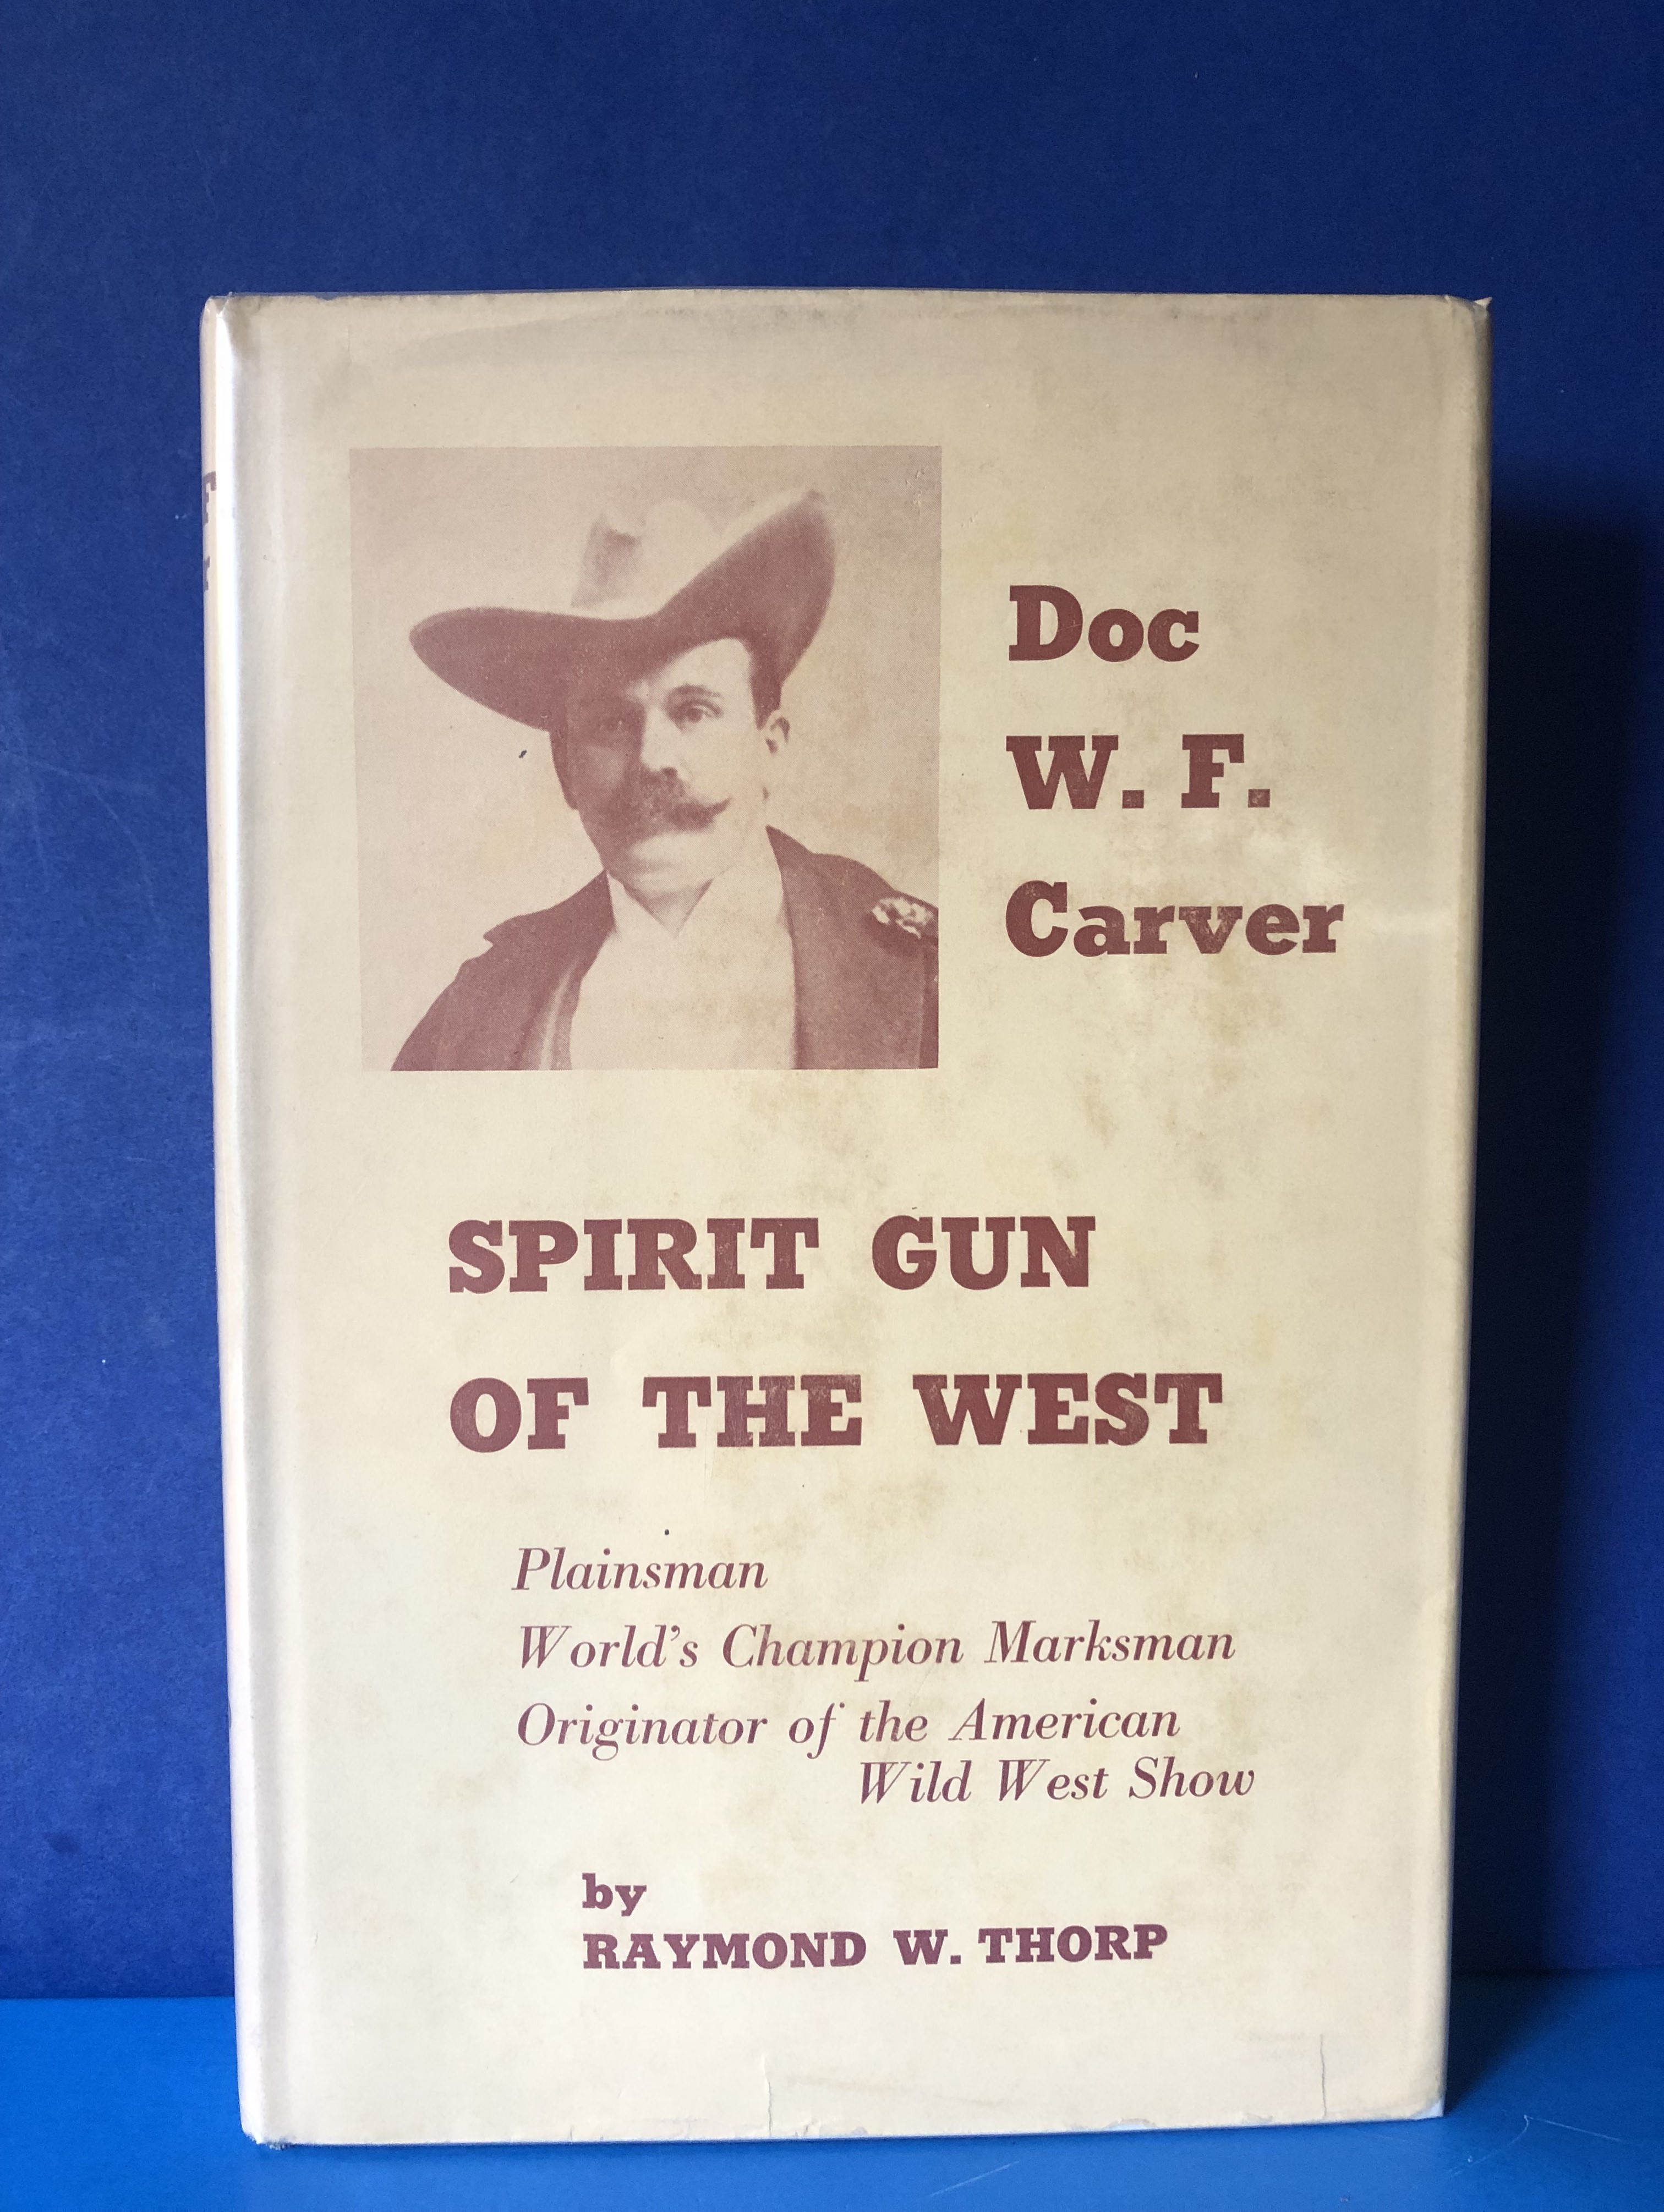 Spirit Gun of the West, the Story of Doc W. F. Carver, Plainsman